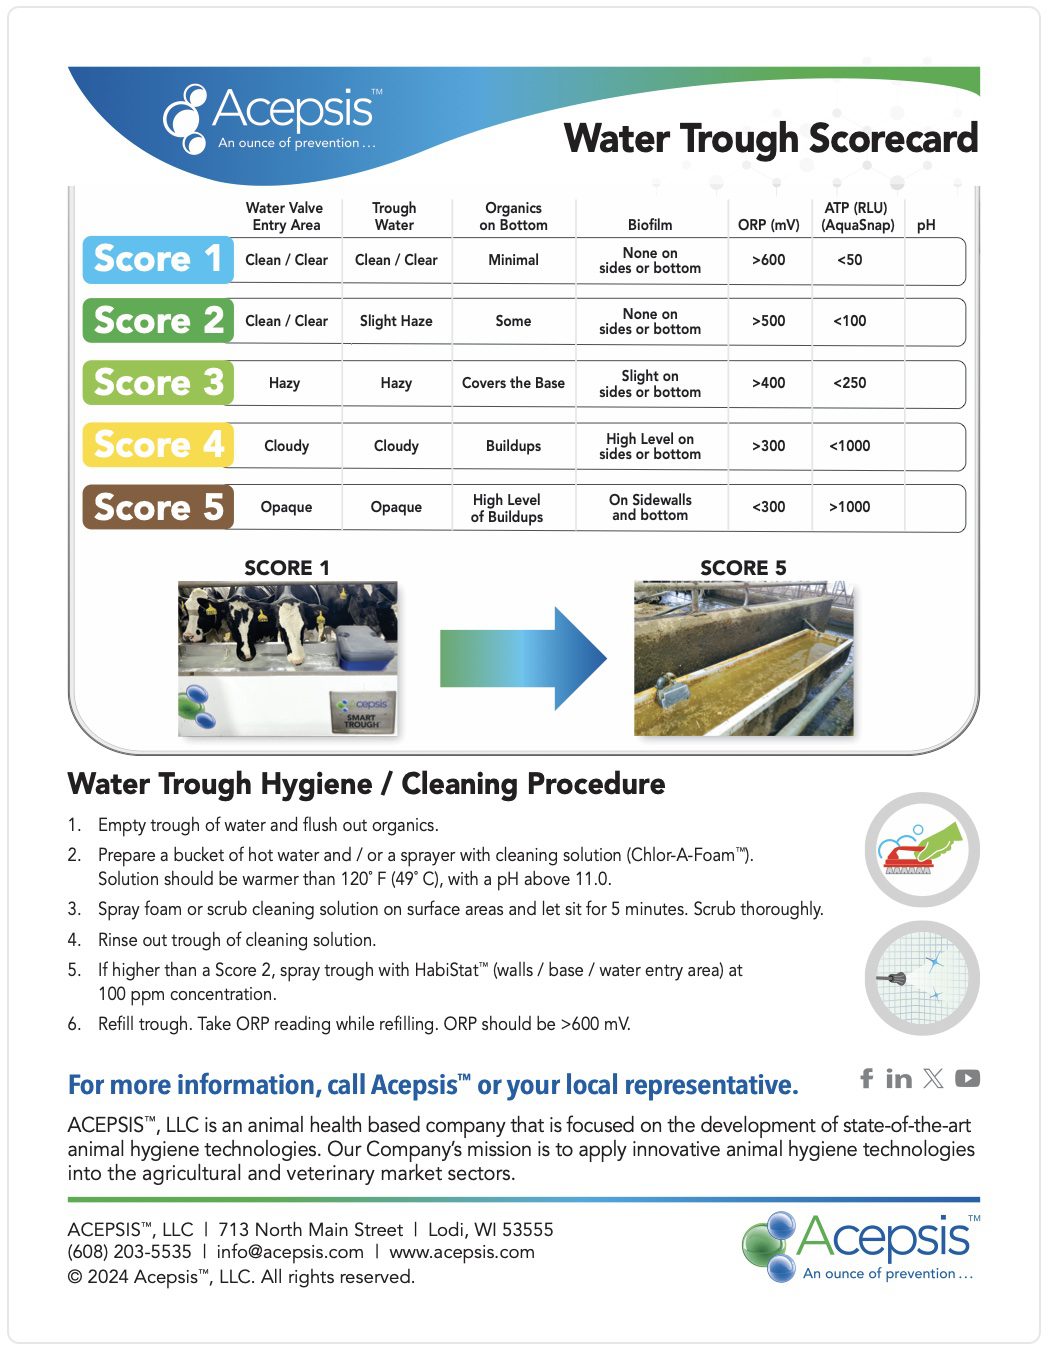 Acepsis WaterTrough Scorecard